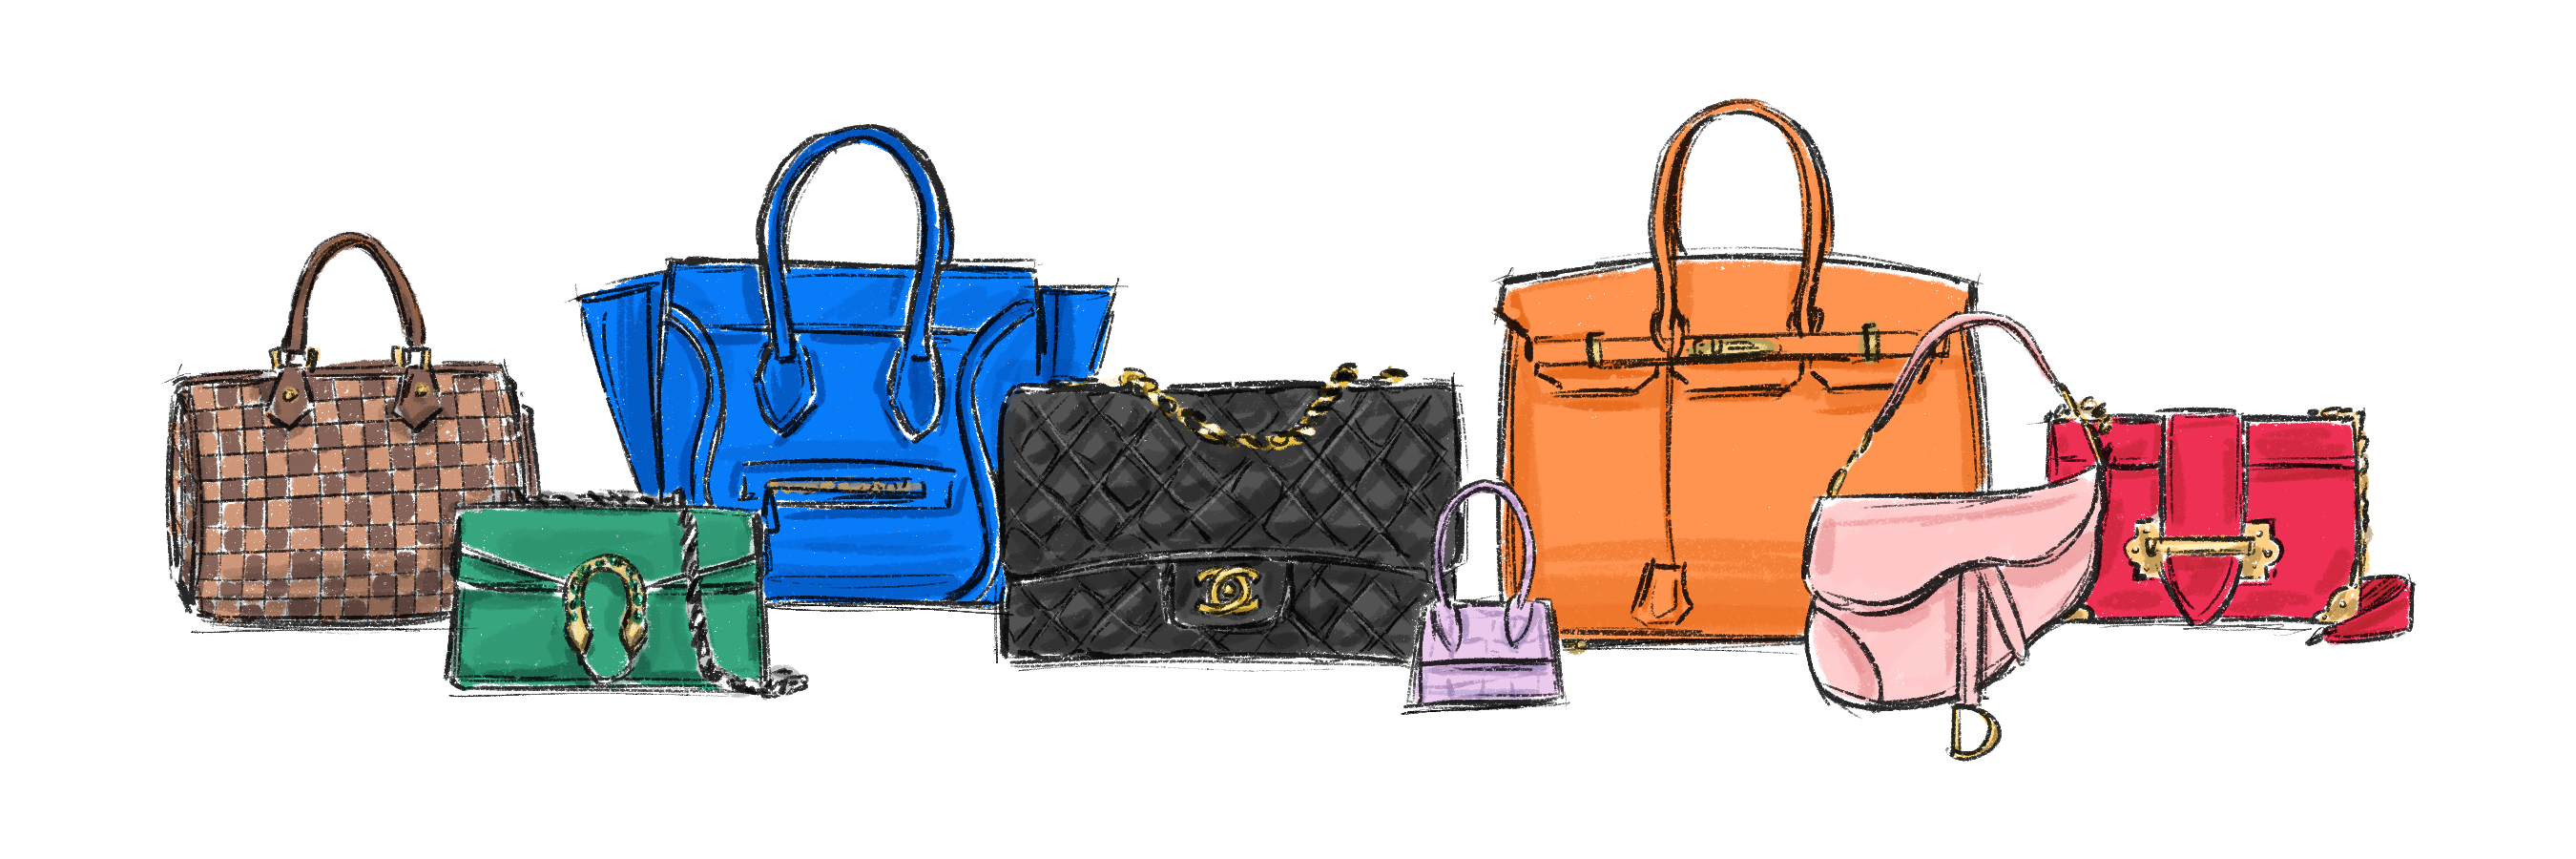 Handbags for Women: Women's Crossbody, Totes & Clutches | ALDO Shoes India